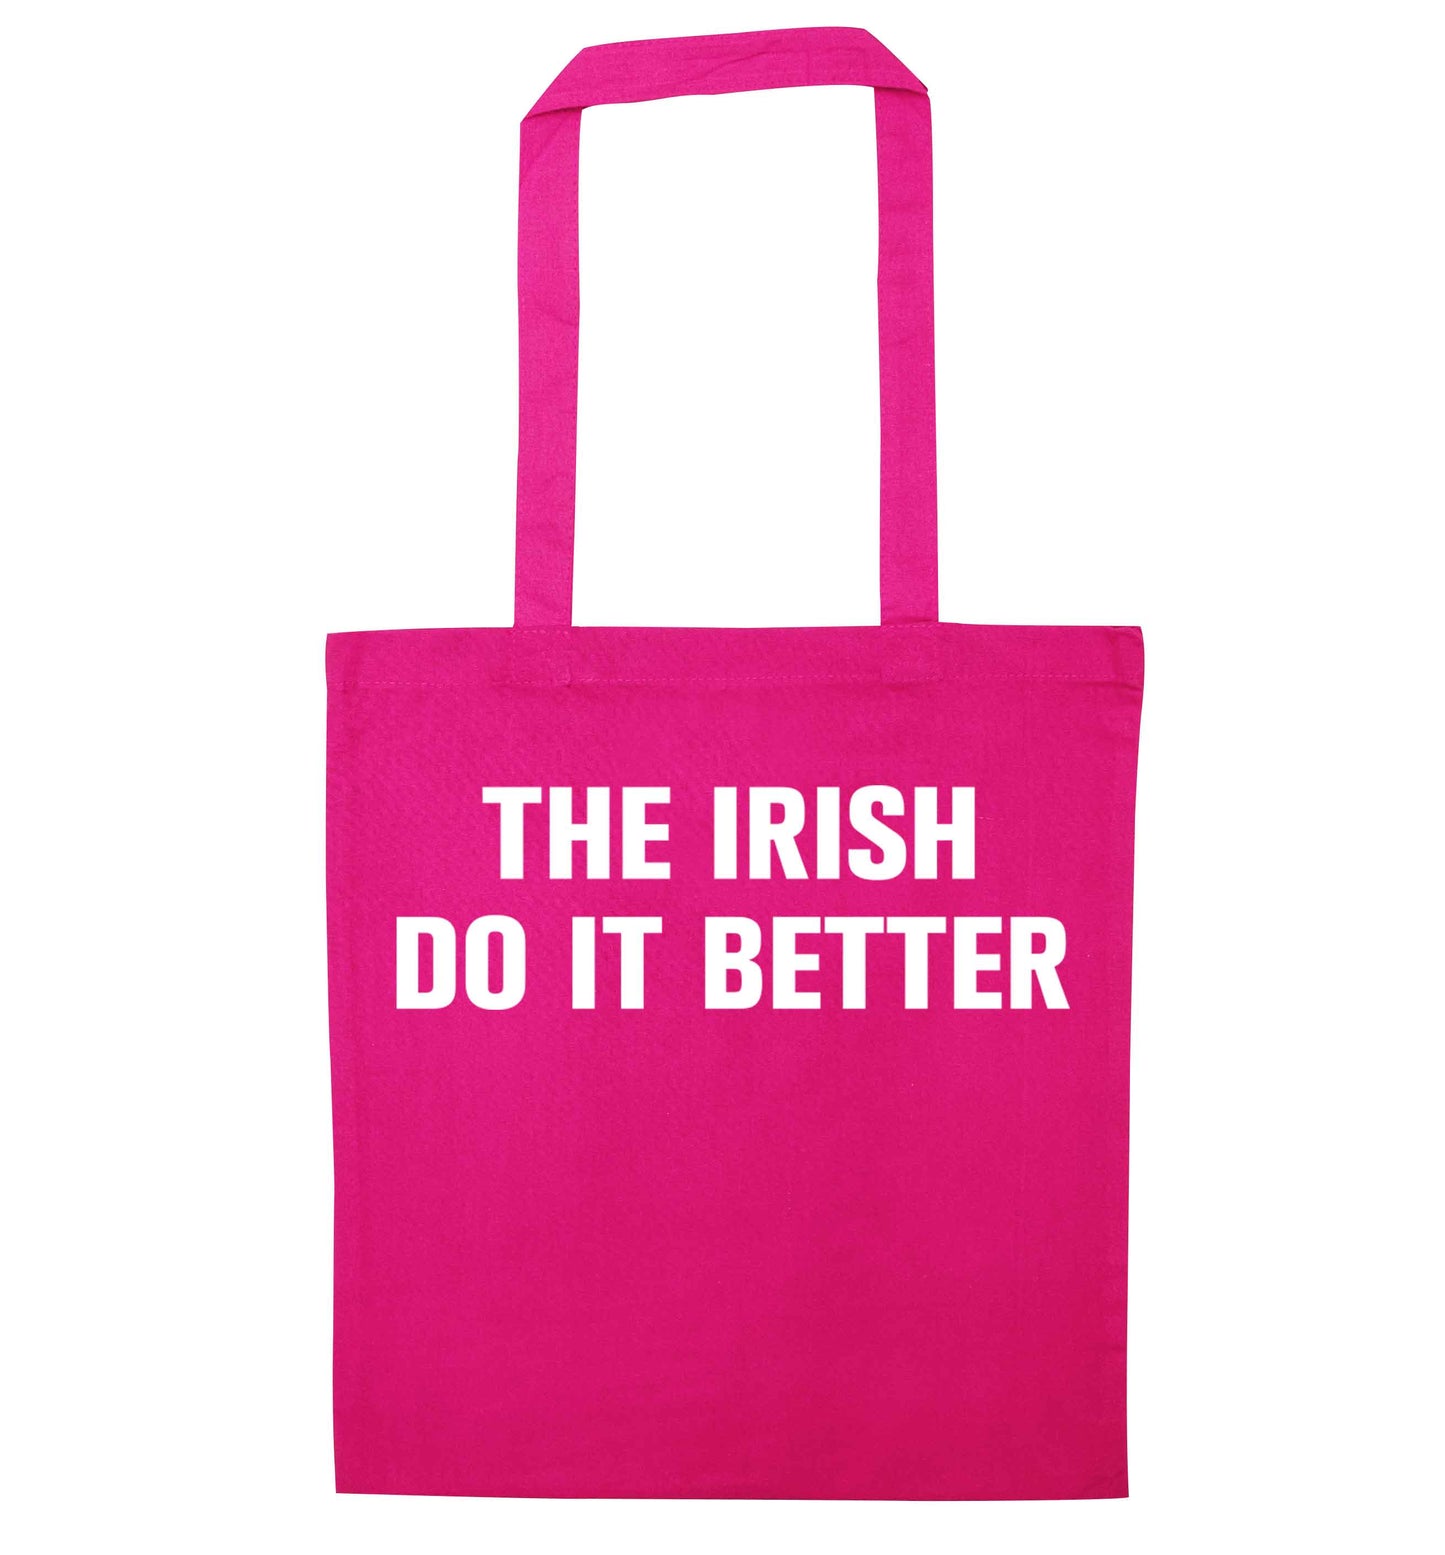 The Irish do it better pink tote bag